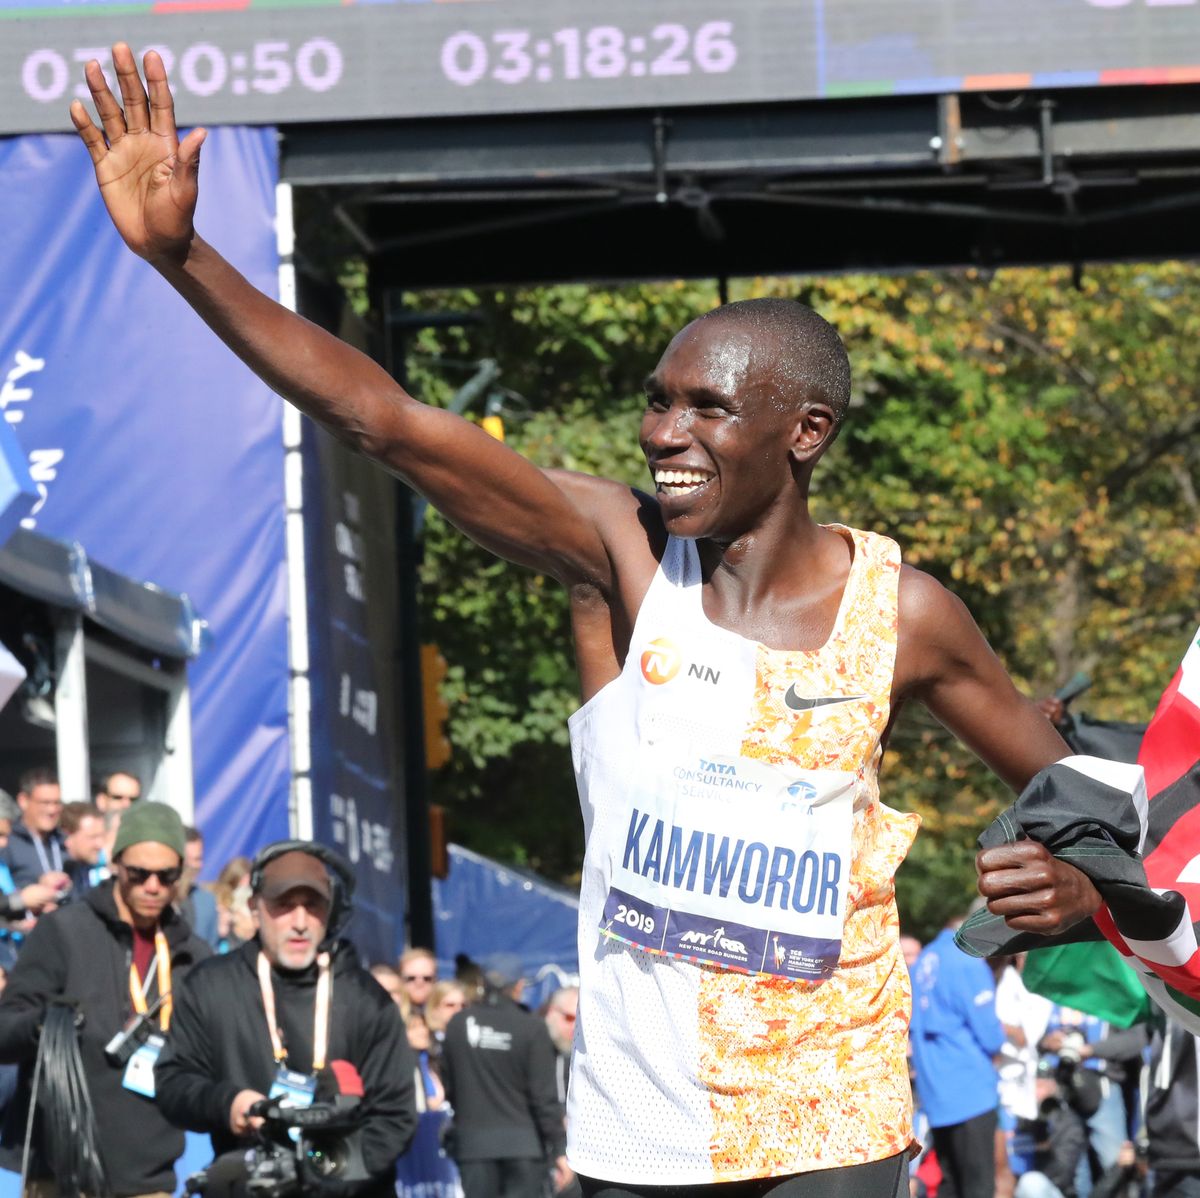 Geoffrey Kamworor | Marathoner Hit By Motorcyclist on Morning Run